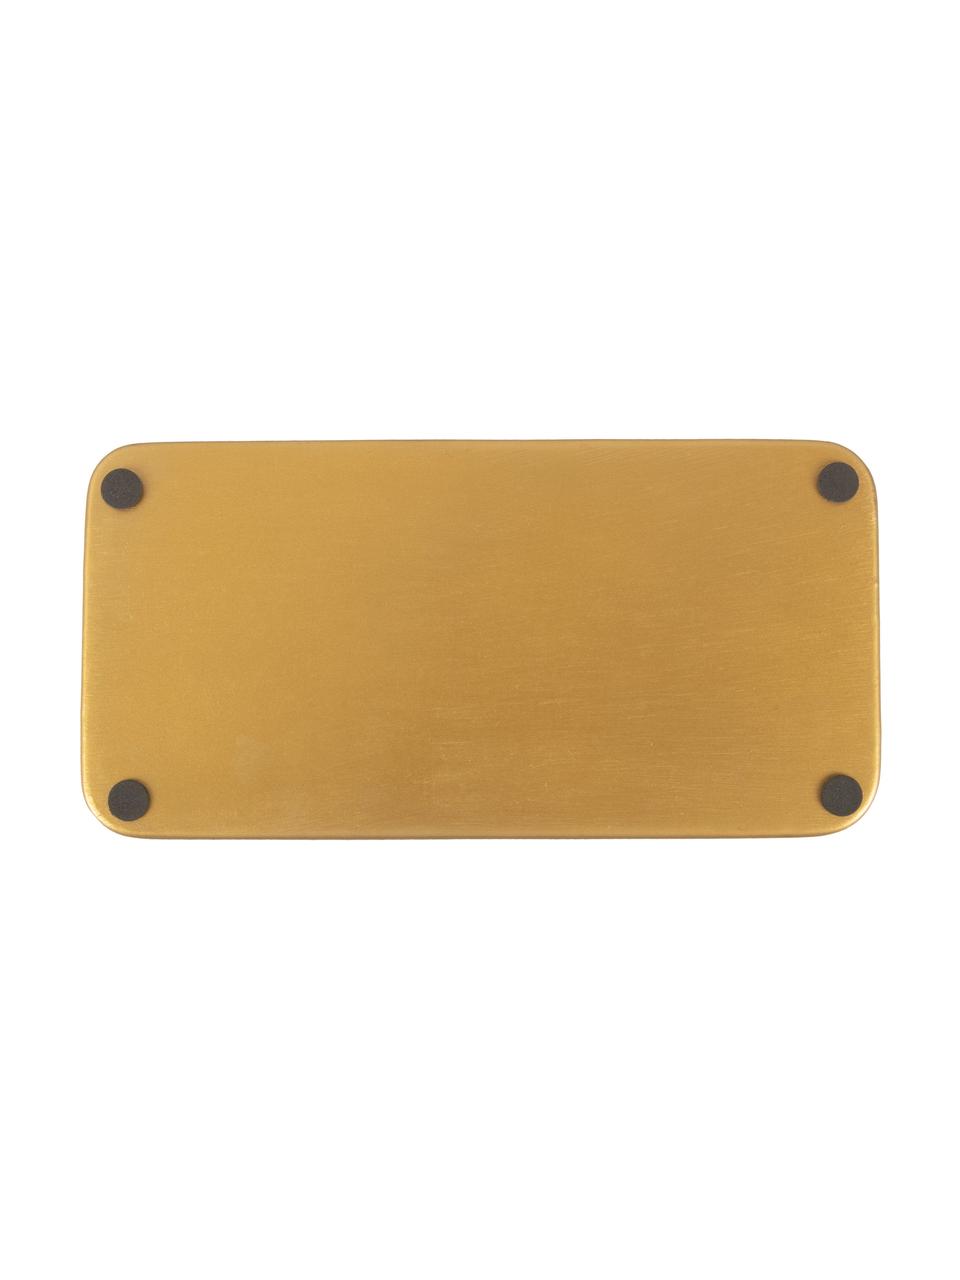 Deko-Tablett Festive mit glänzender Oberfläche, Metall, beschichtet, Weiß, Goldfarben, L 25 x B 13 cm